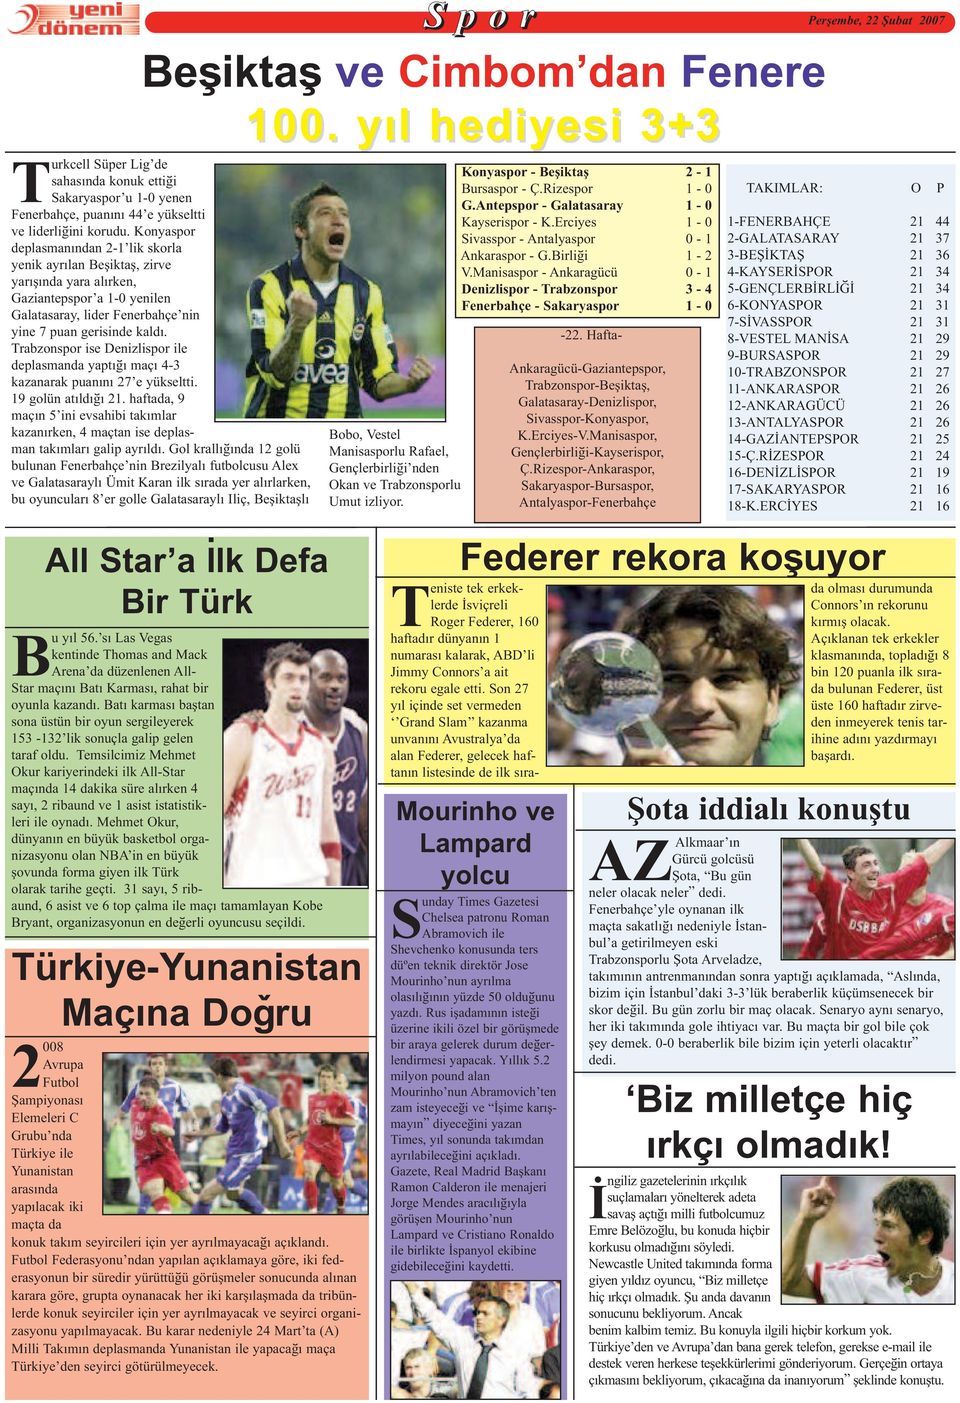 Trabzonspor ise Denizlispor ile deplasmanda yaptýðý maçý 4-3 kazanarak puanýný 27 e yükseltti. 19 golün atýldýðý 21.